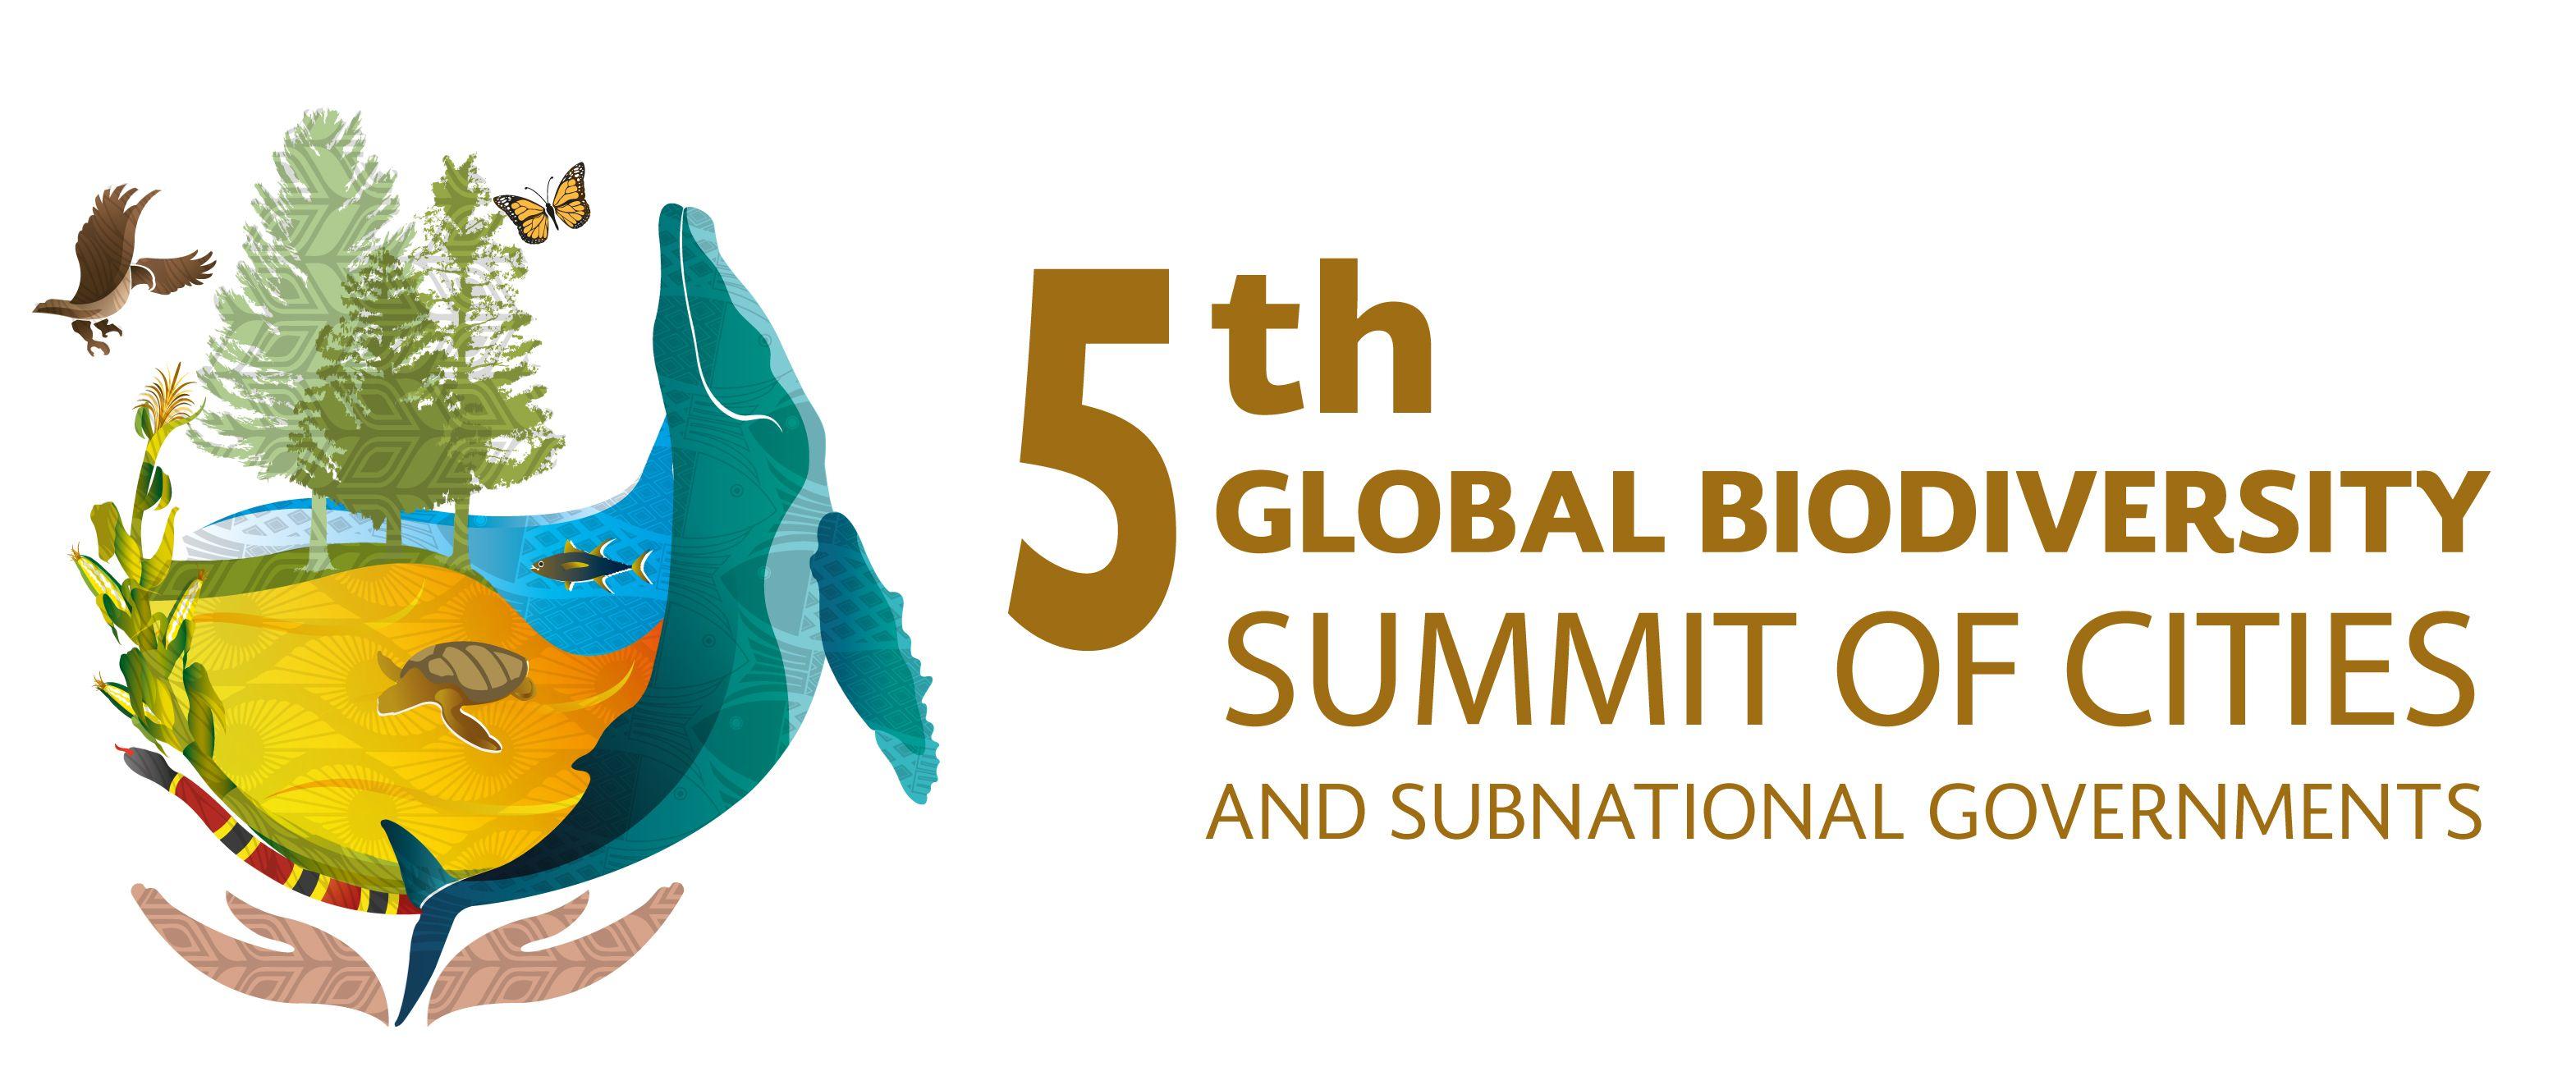 CBD COP 13: 5th Global Biodiversity Summit of Cities & Subnational